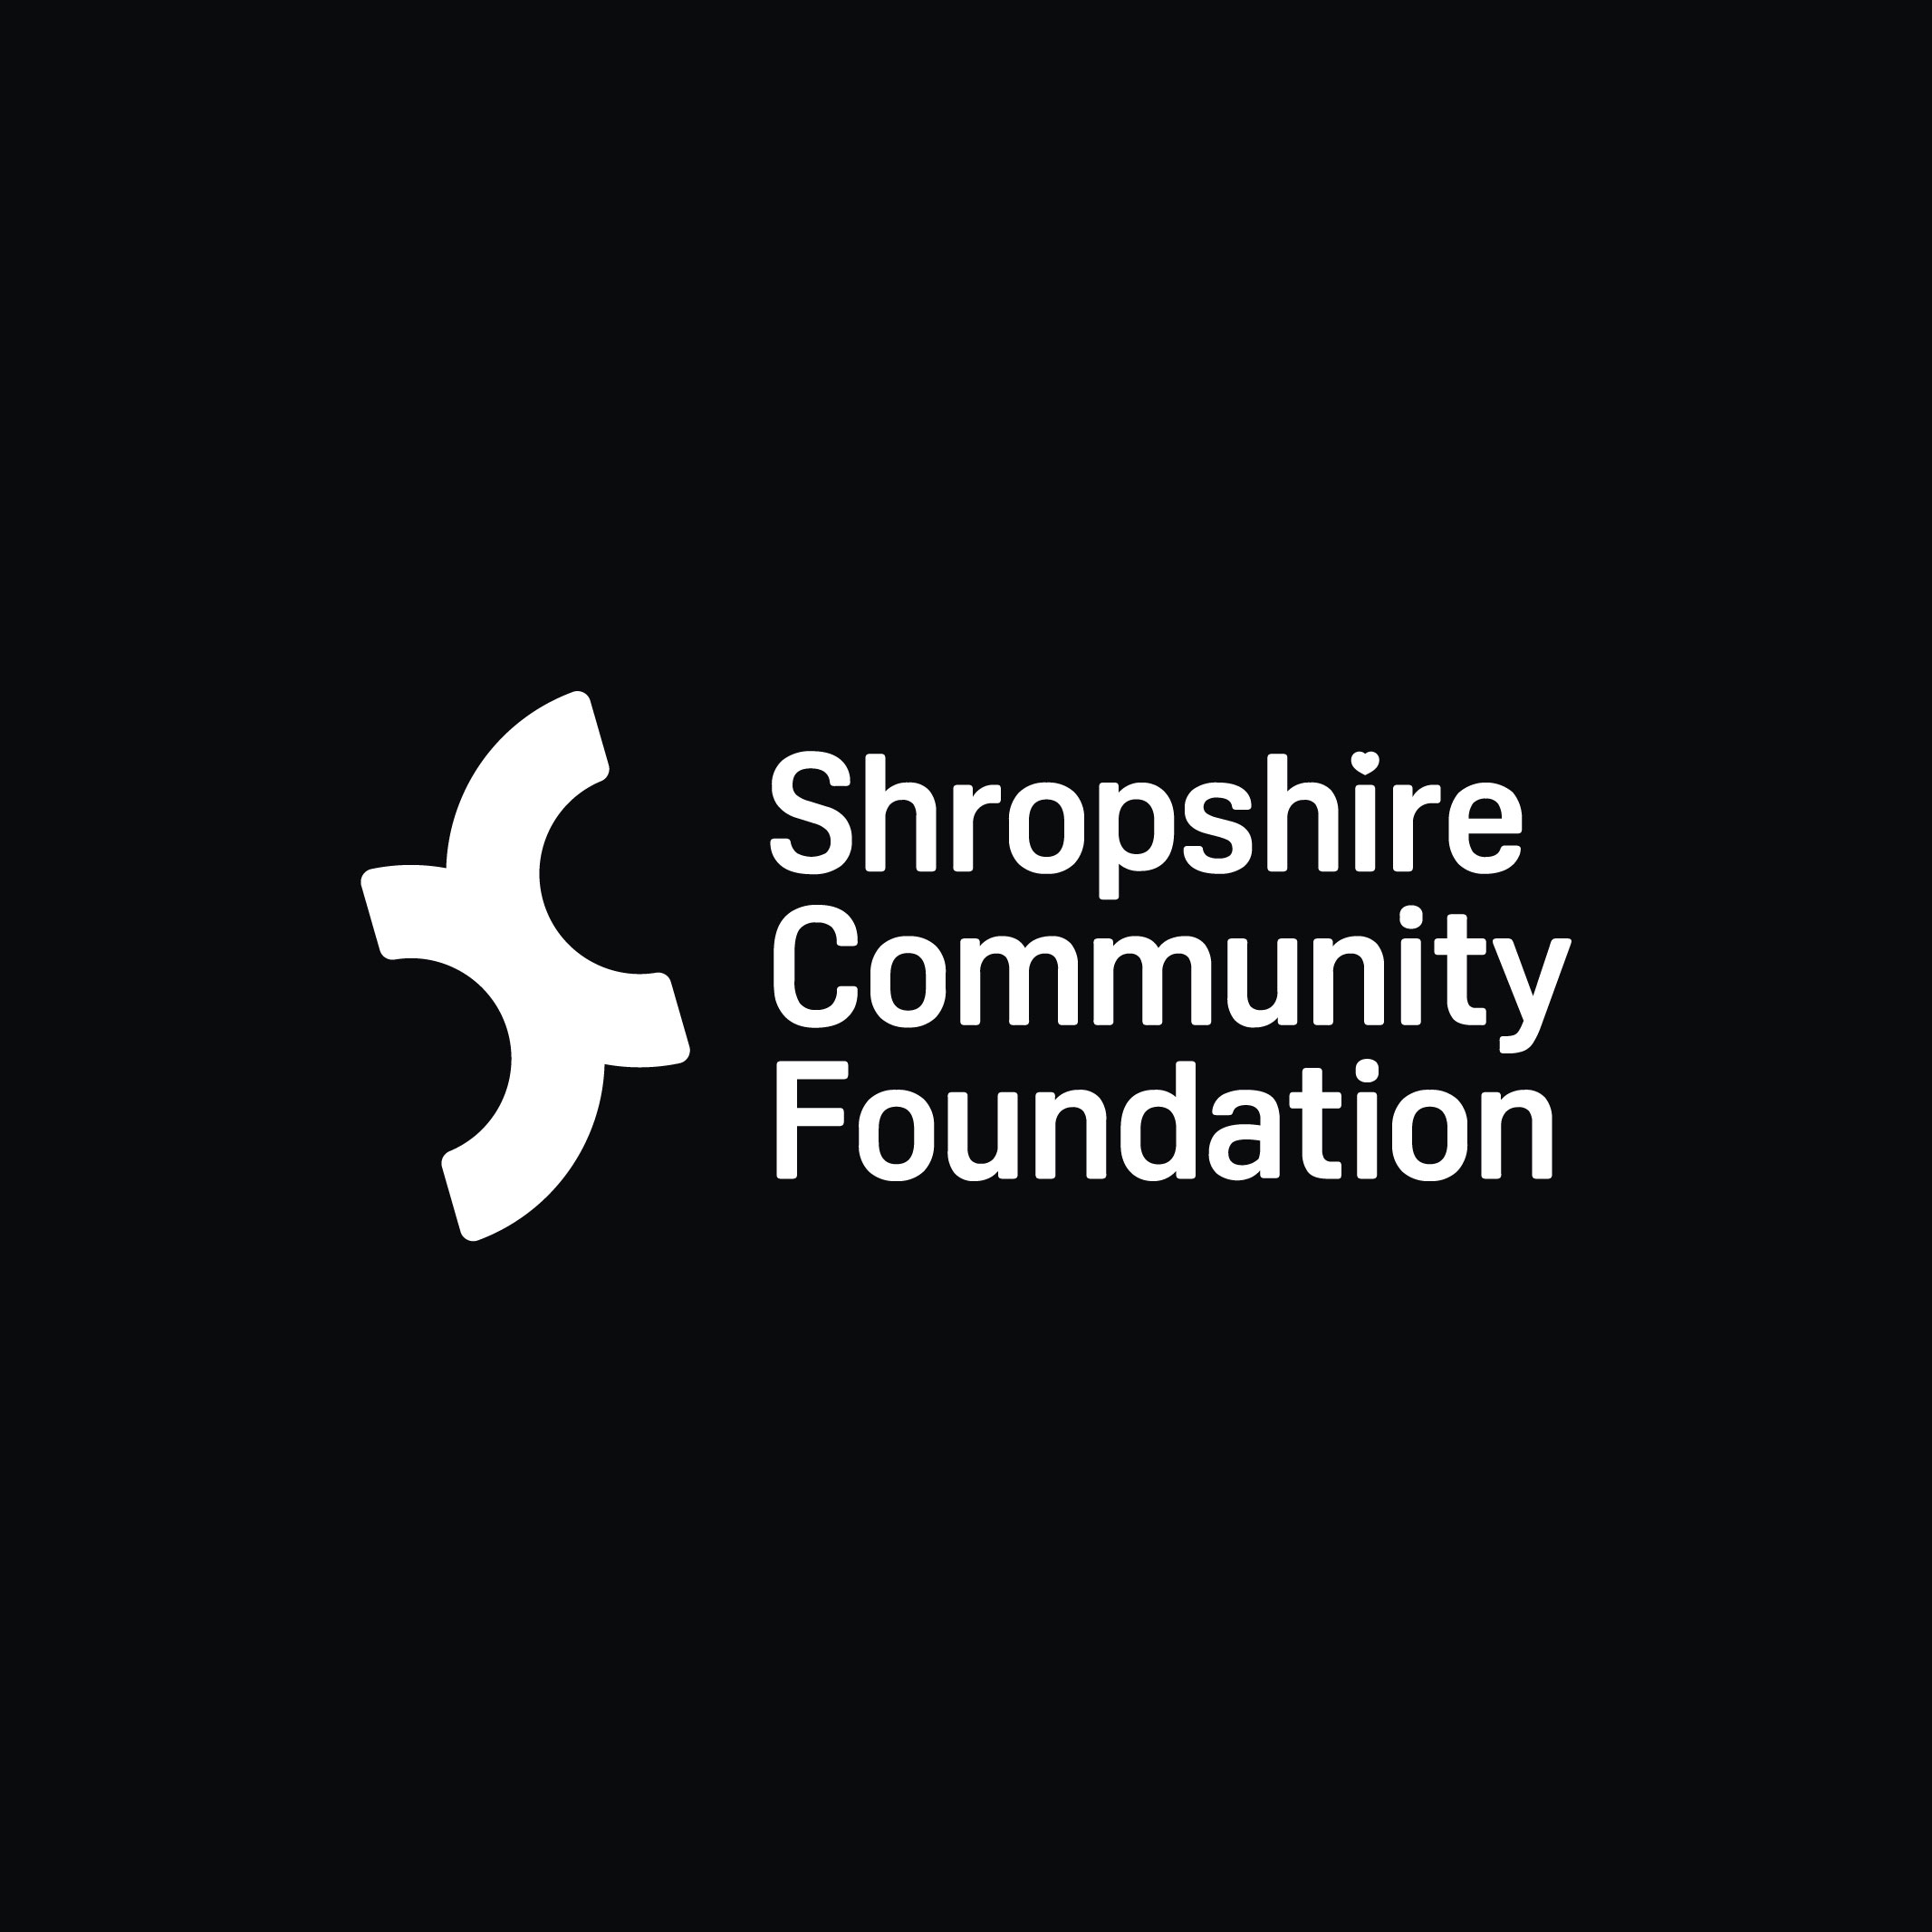 Shropshire Community Foundation logo accreditation | Reech